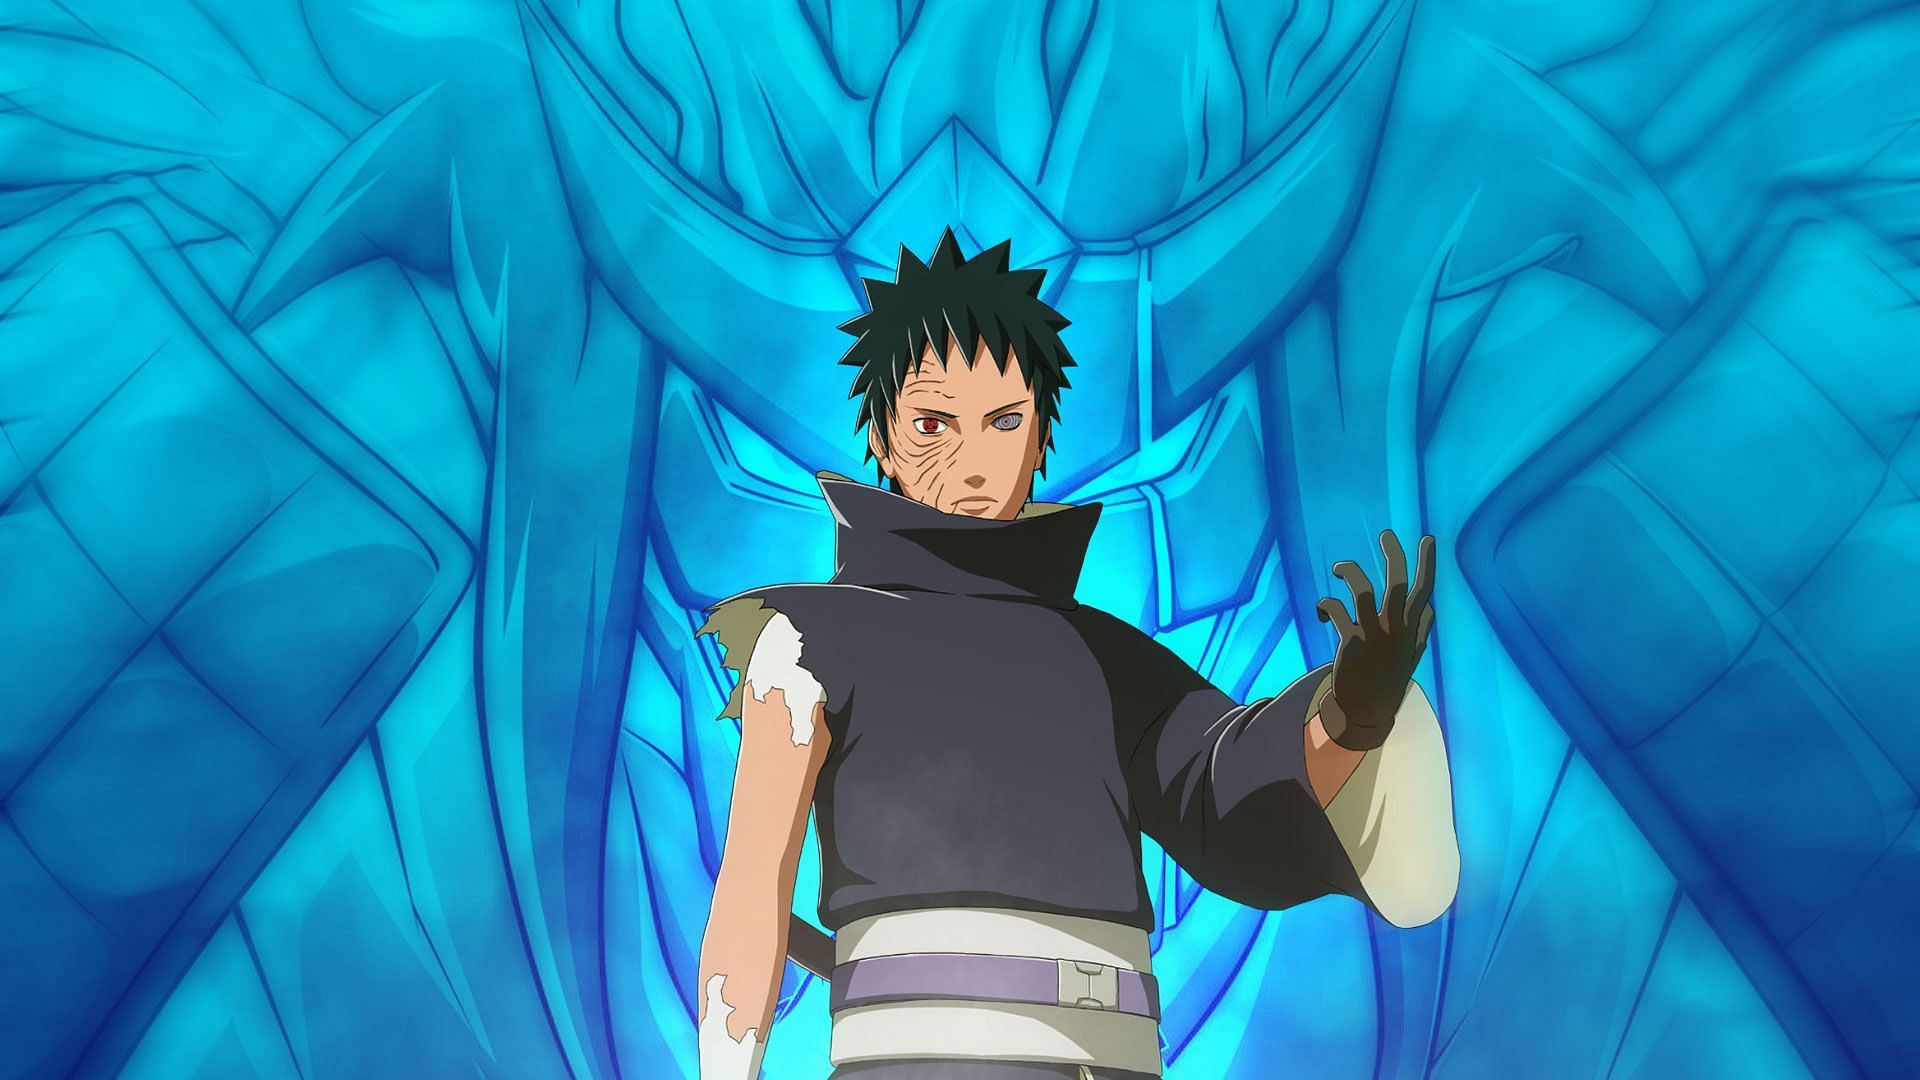 Obito Uchiha as seen in Naruto (Image via Sportskeeda)